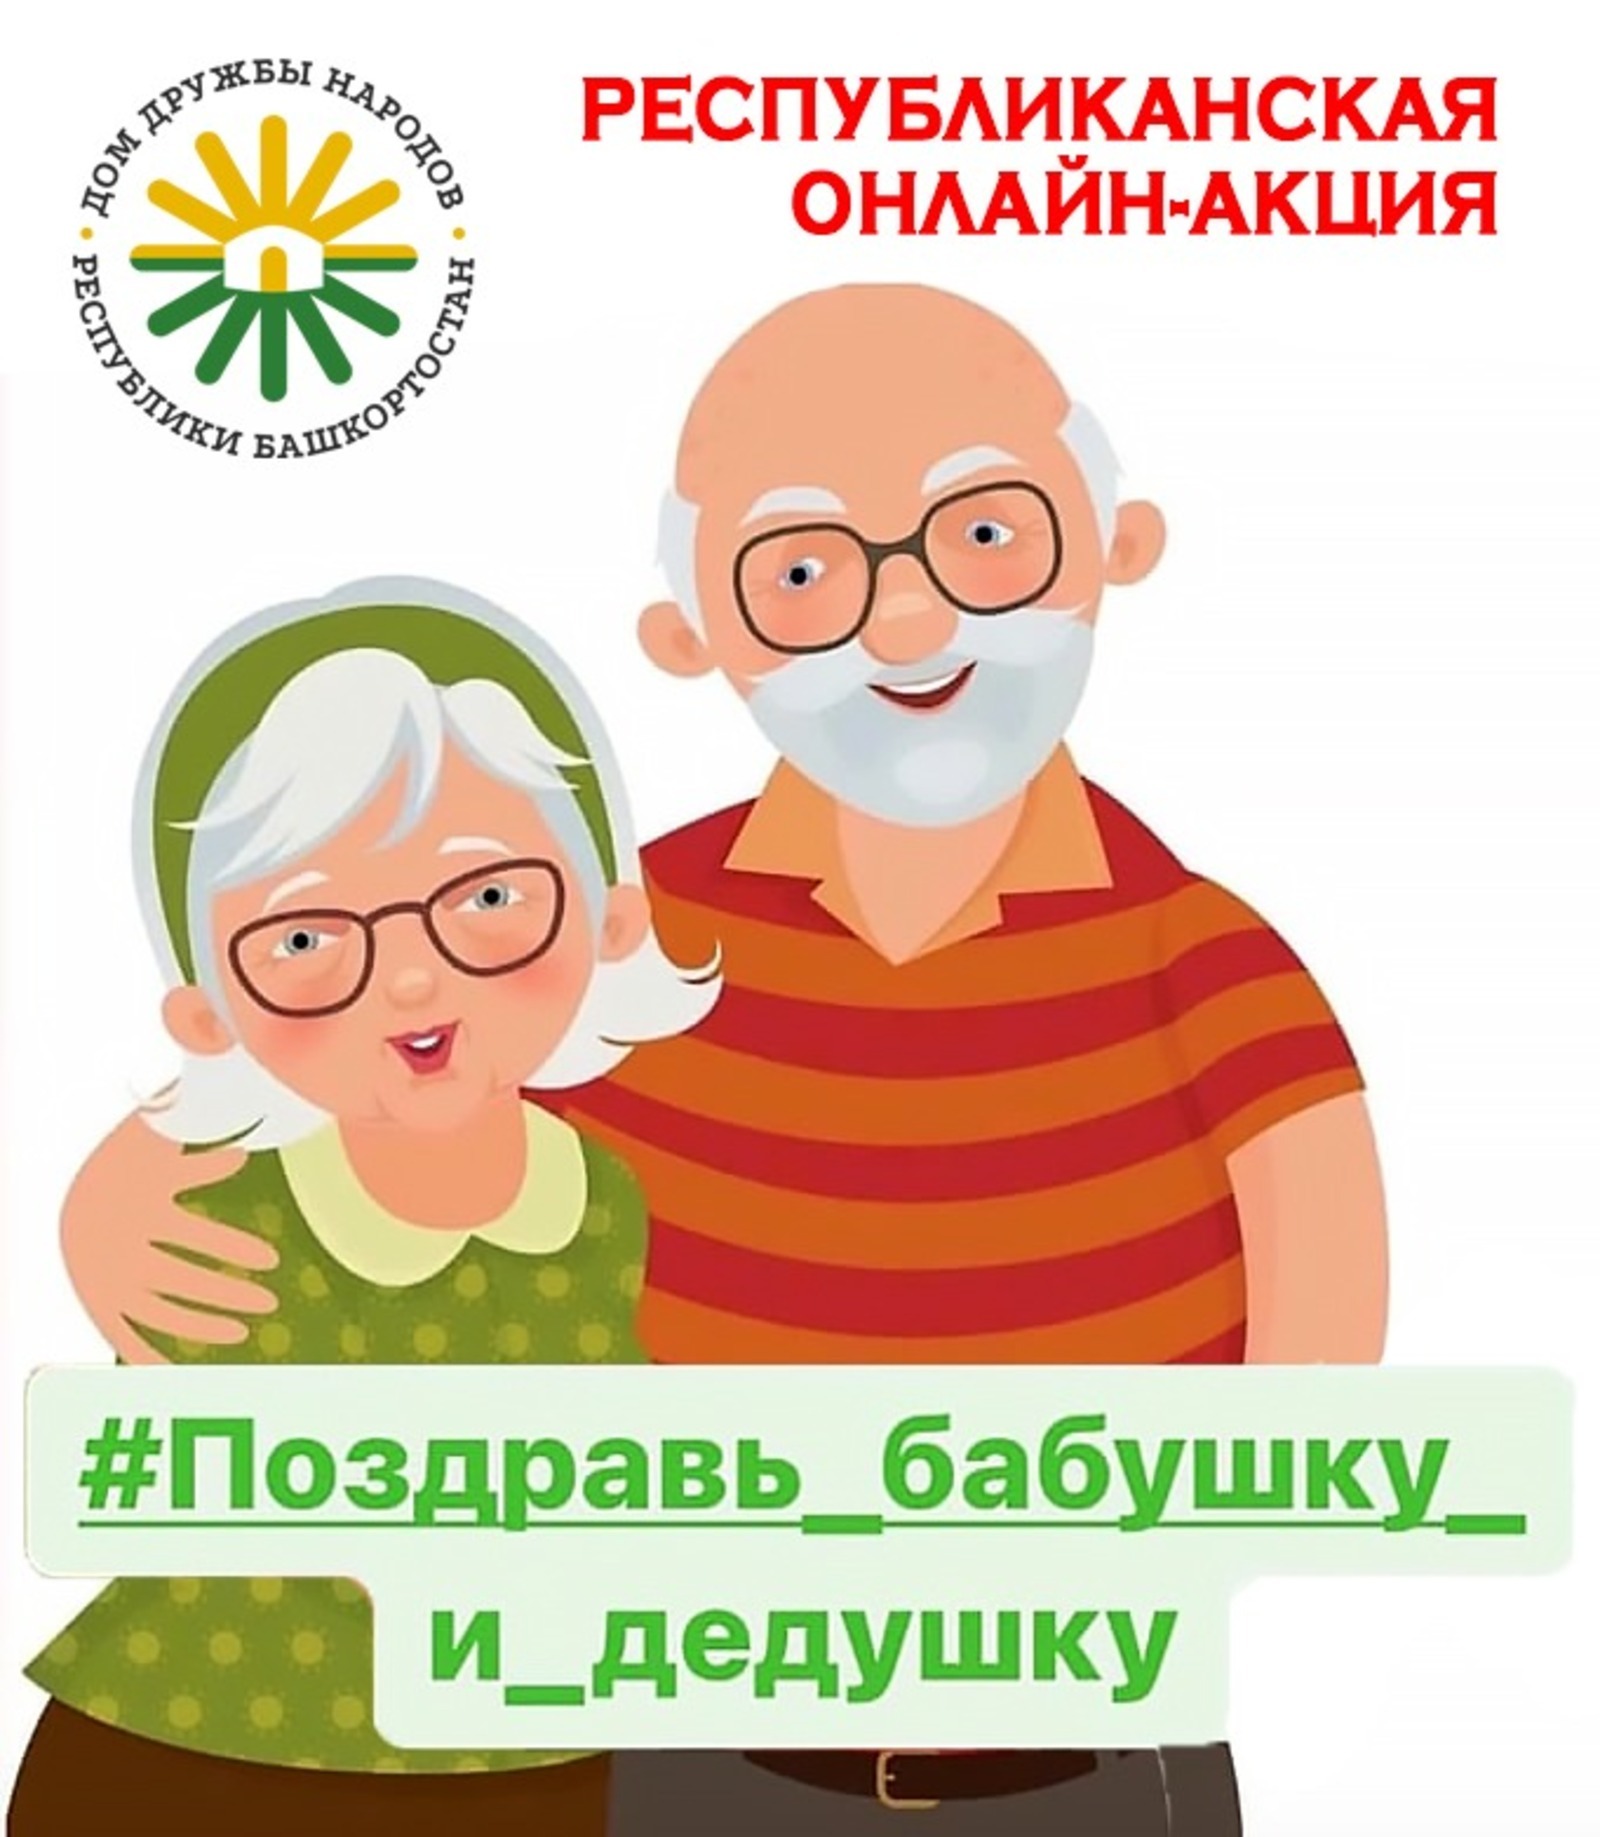 В Башкирии запустили онлайн-акцию «Поздравь бабушку и дедушку»